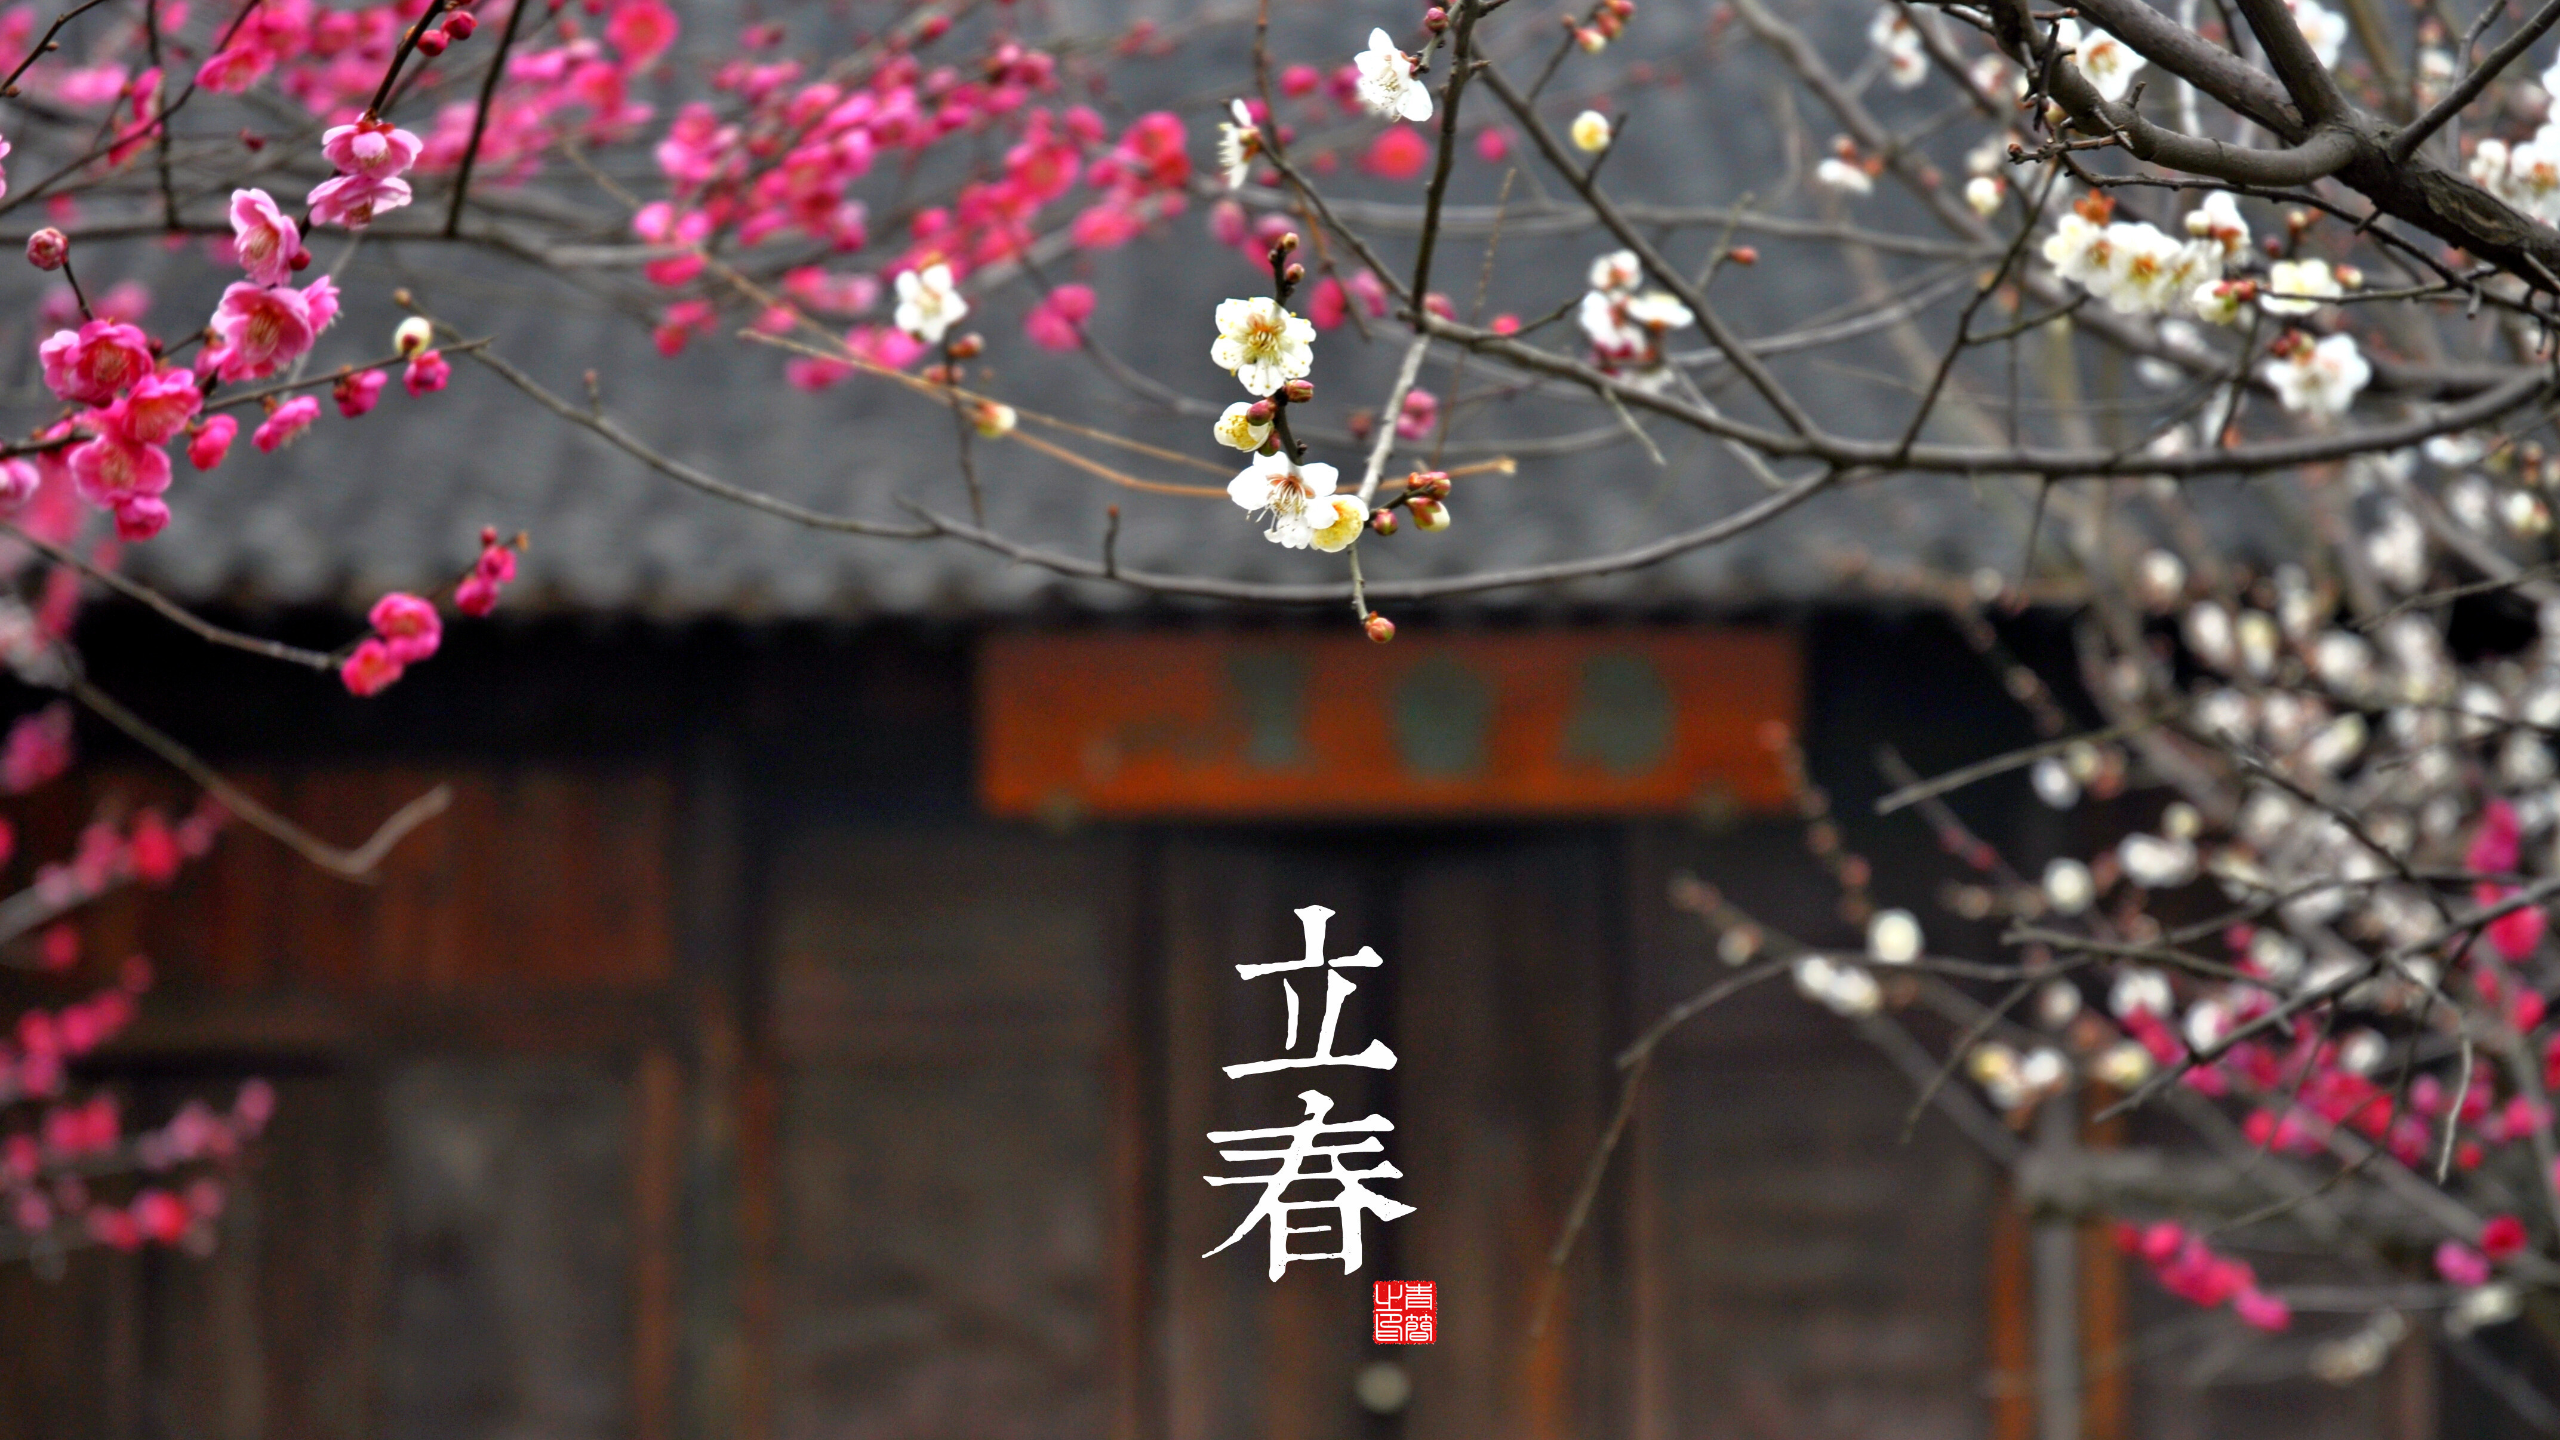 General 2560x1440 seasons kanji cherry blossom plants Asia